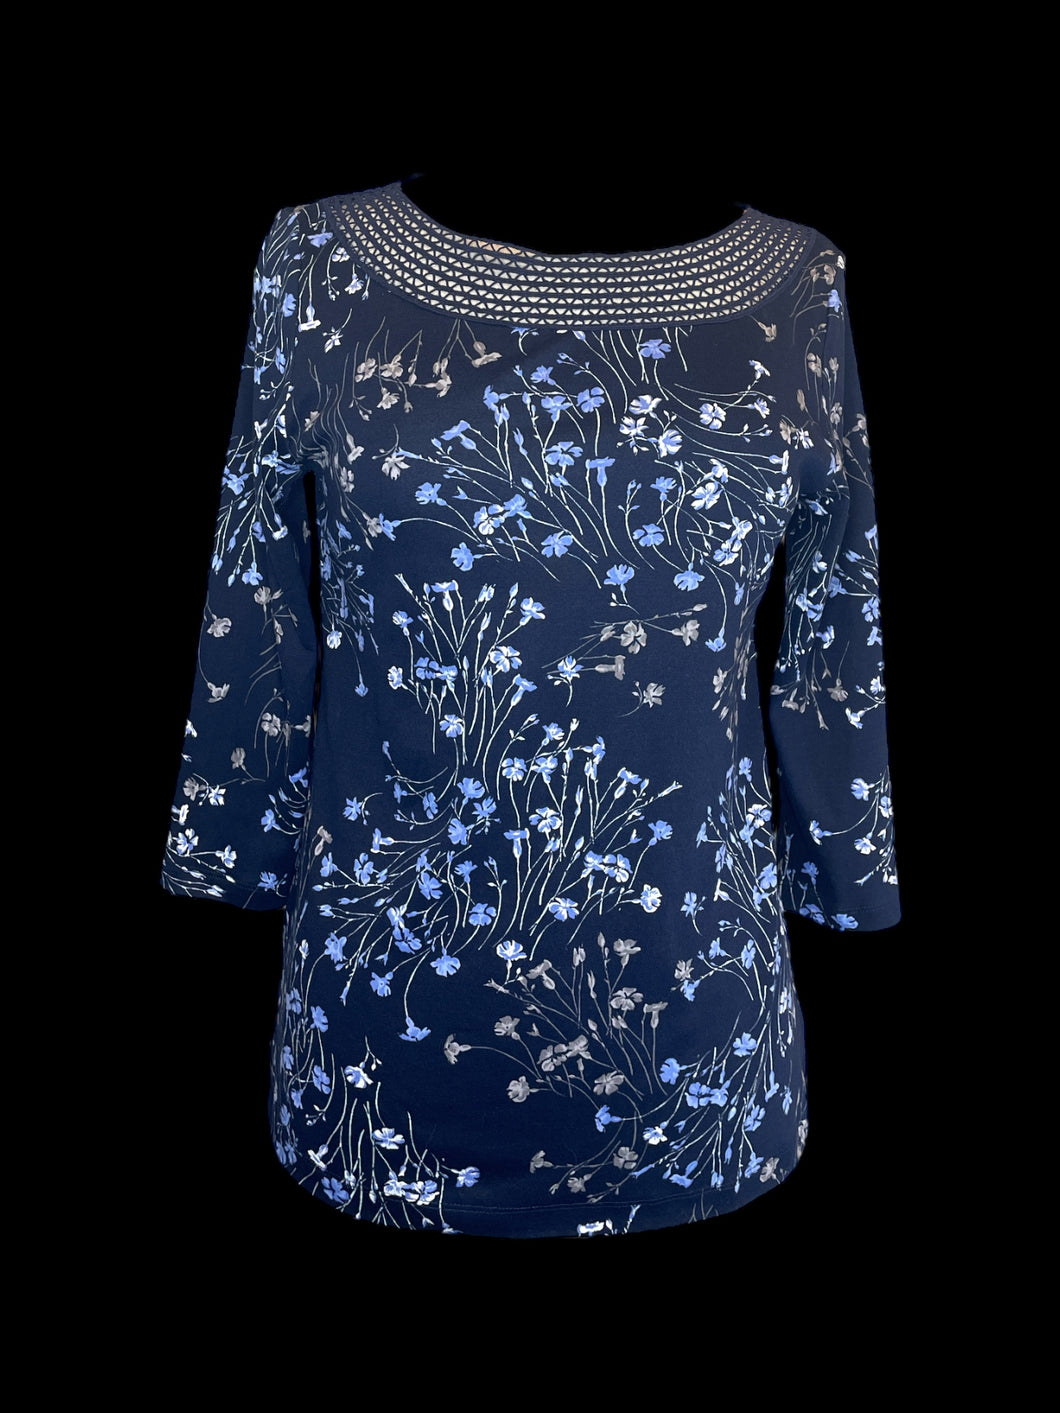 XL Dark blue, periwinkle, & white floral half sleeve scoop neck cotton top w/ triangle lace neckline, & side hem slits